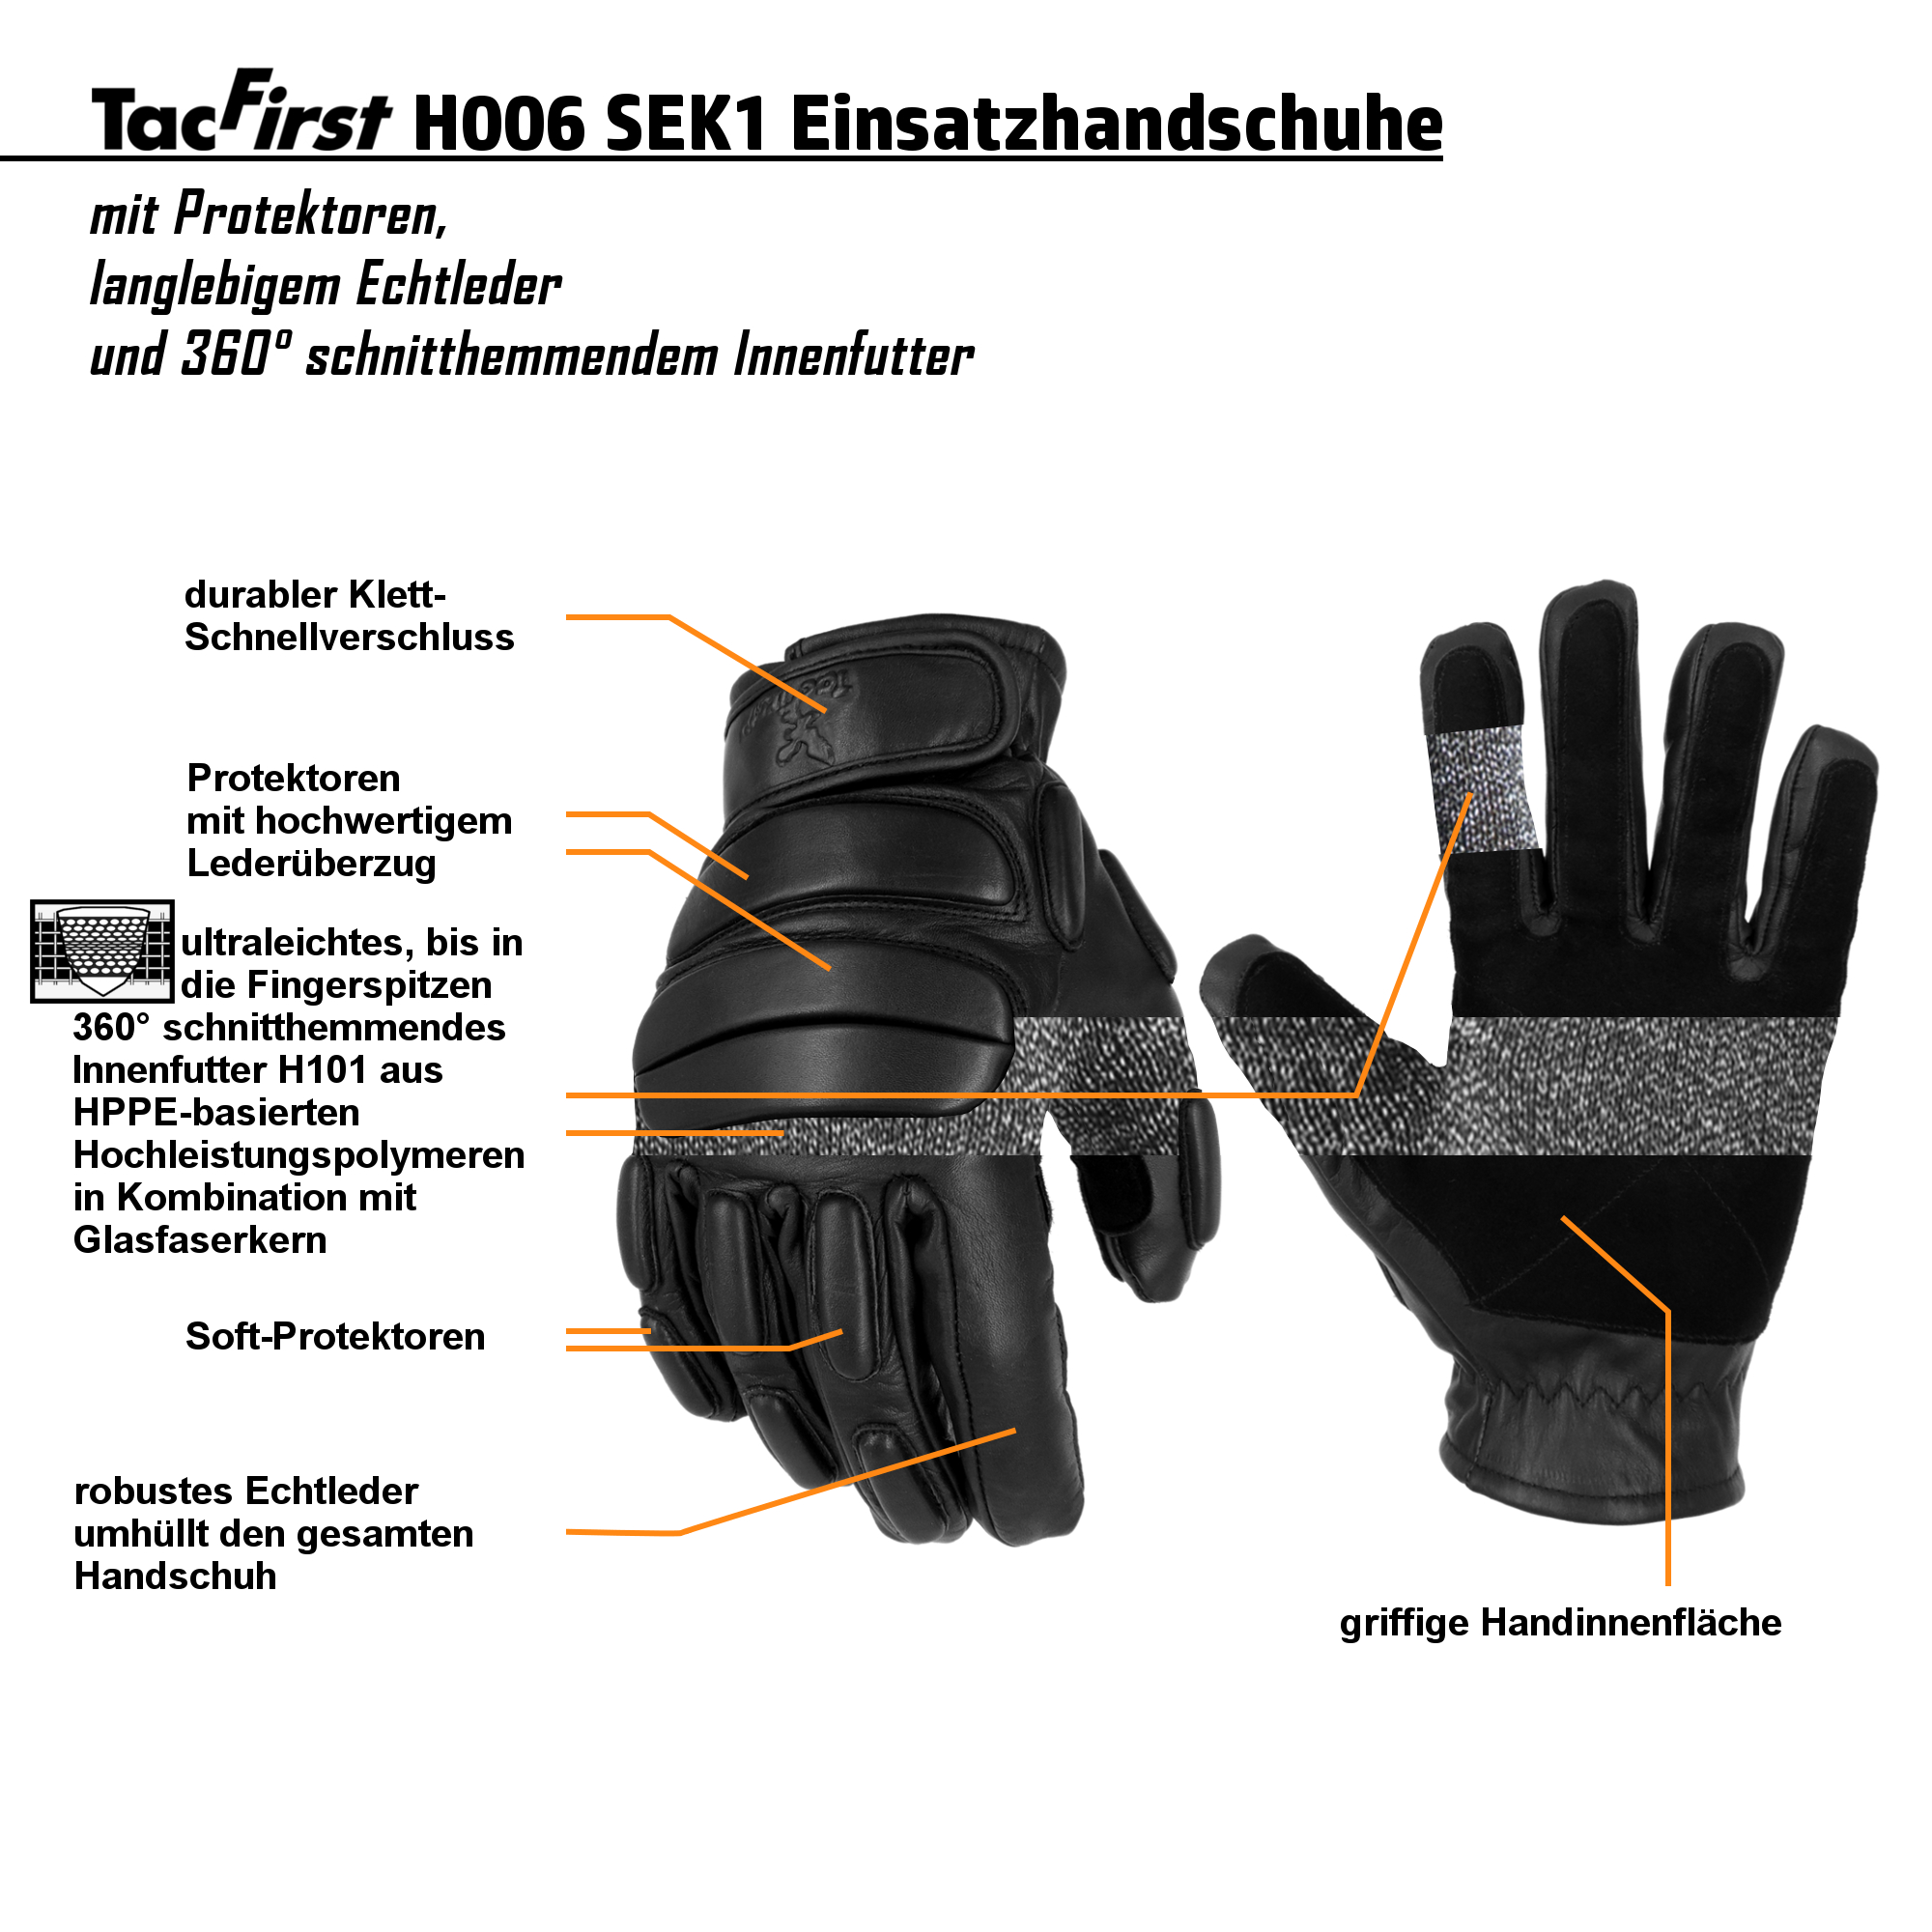 TacFirst® Einsatzhandschuhe H006 SEK 1 Echtleder, 360° schnitthemmend